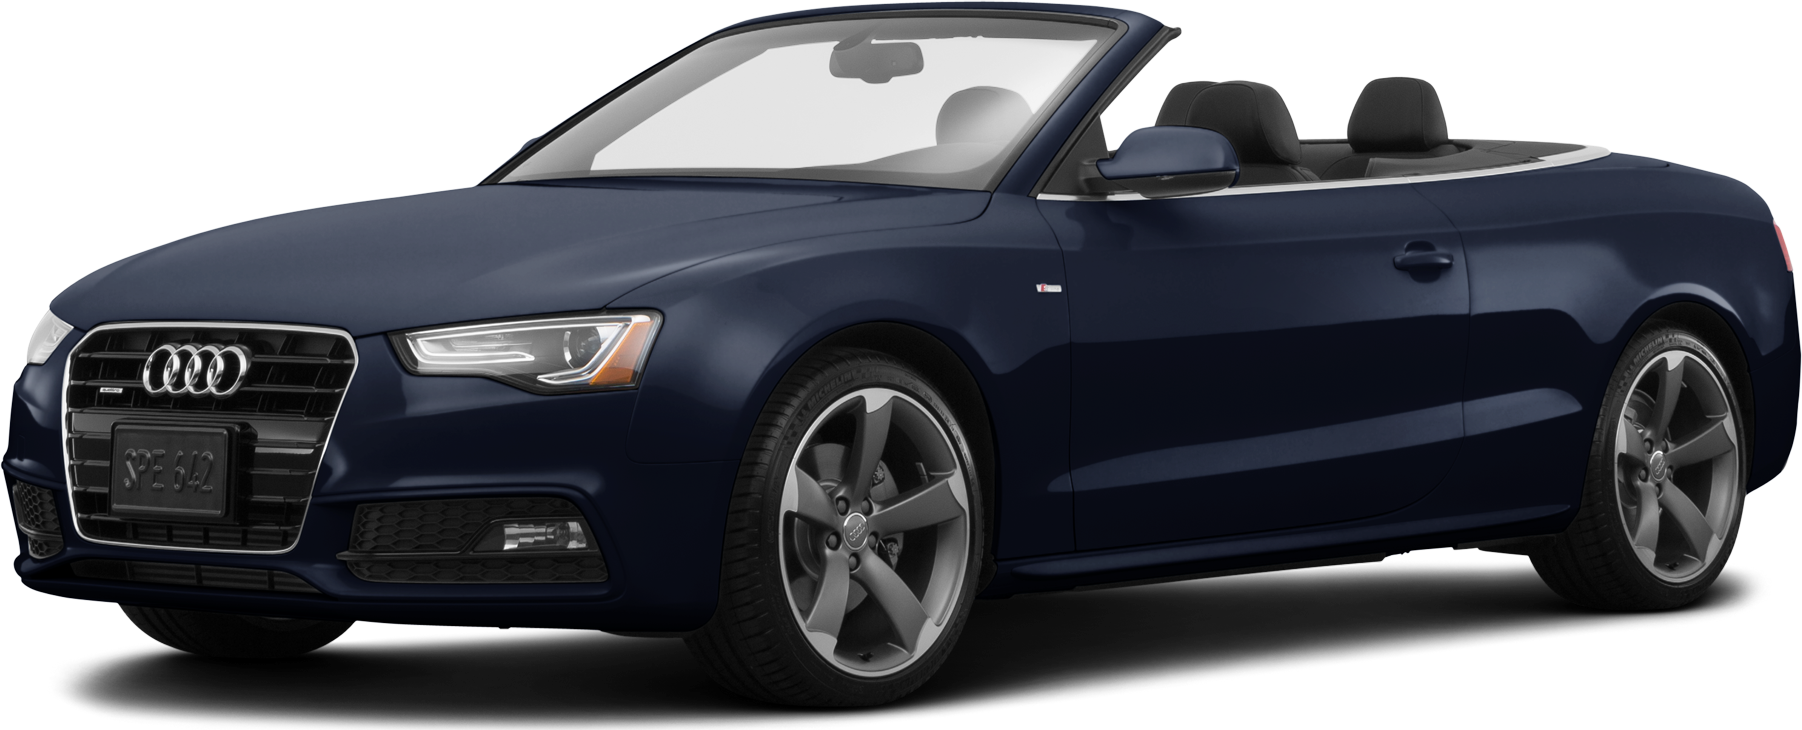 Bâche design spéciale adaptée à Audi A5 Cabrio 2007-2016 Blue with